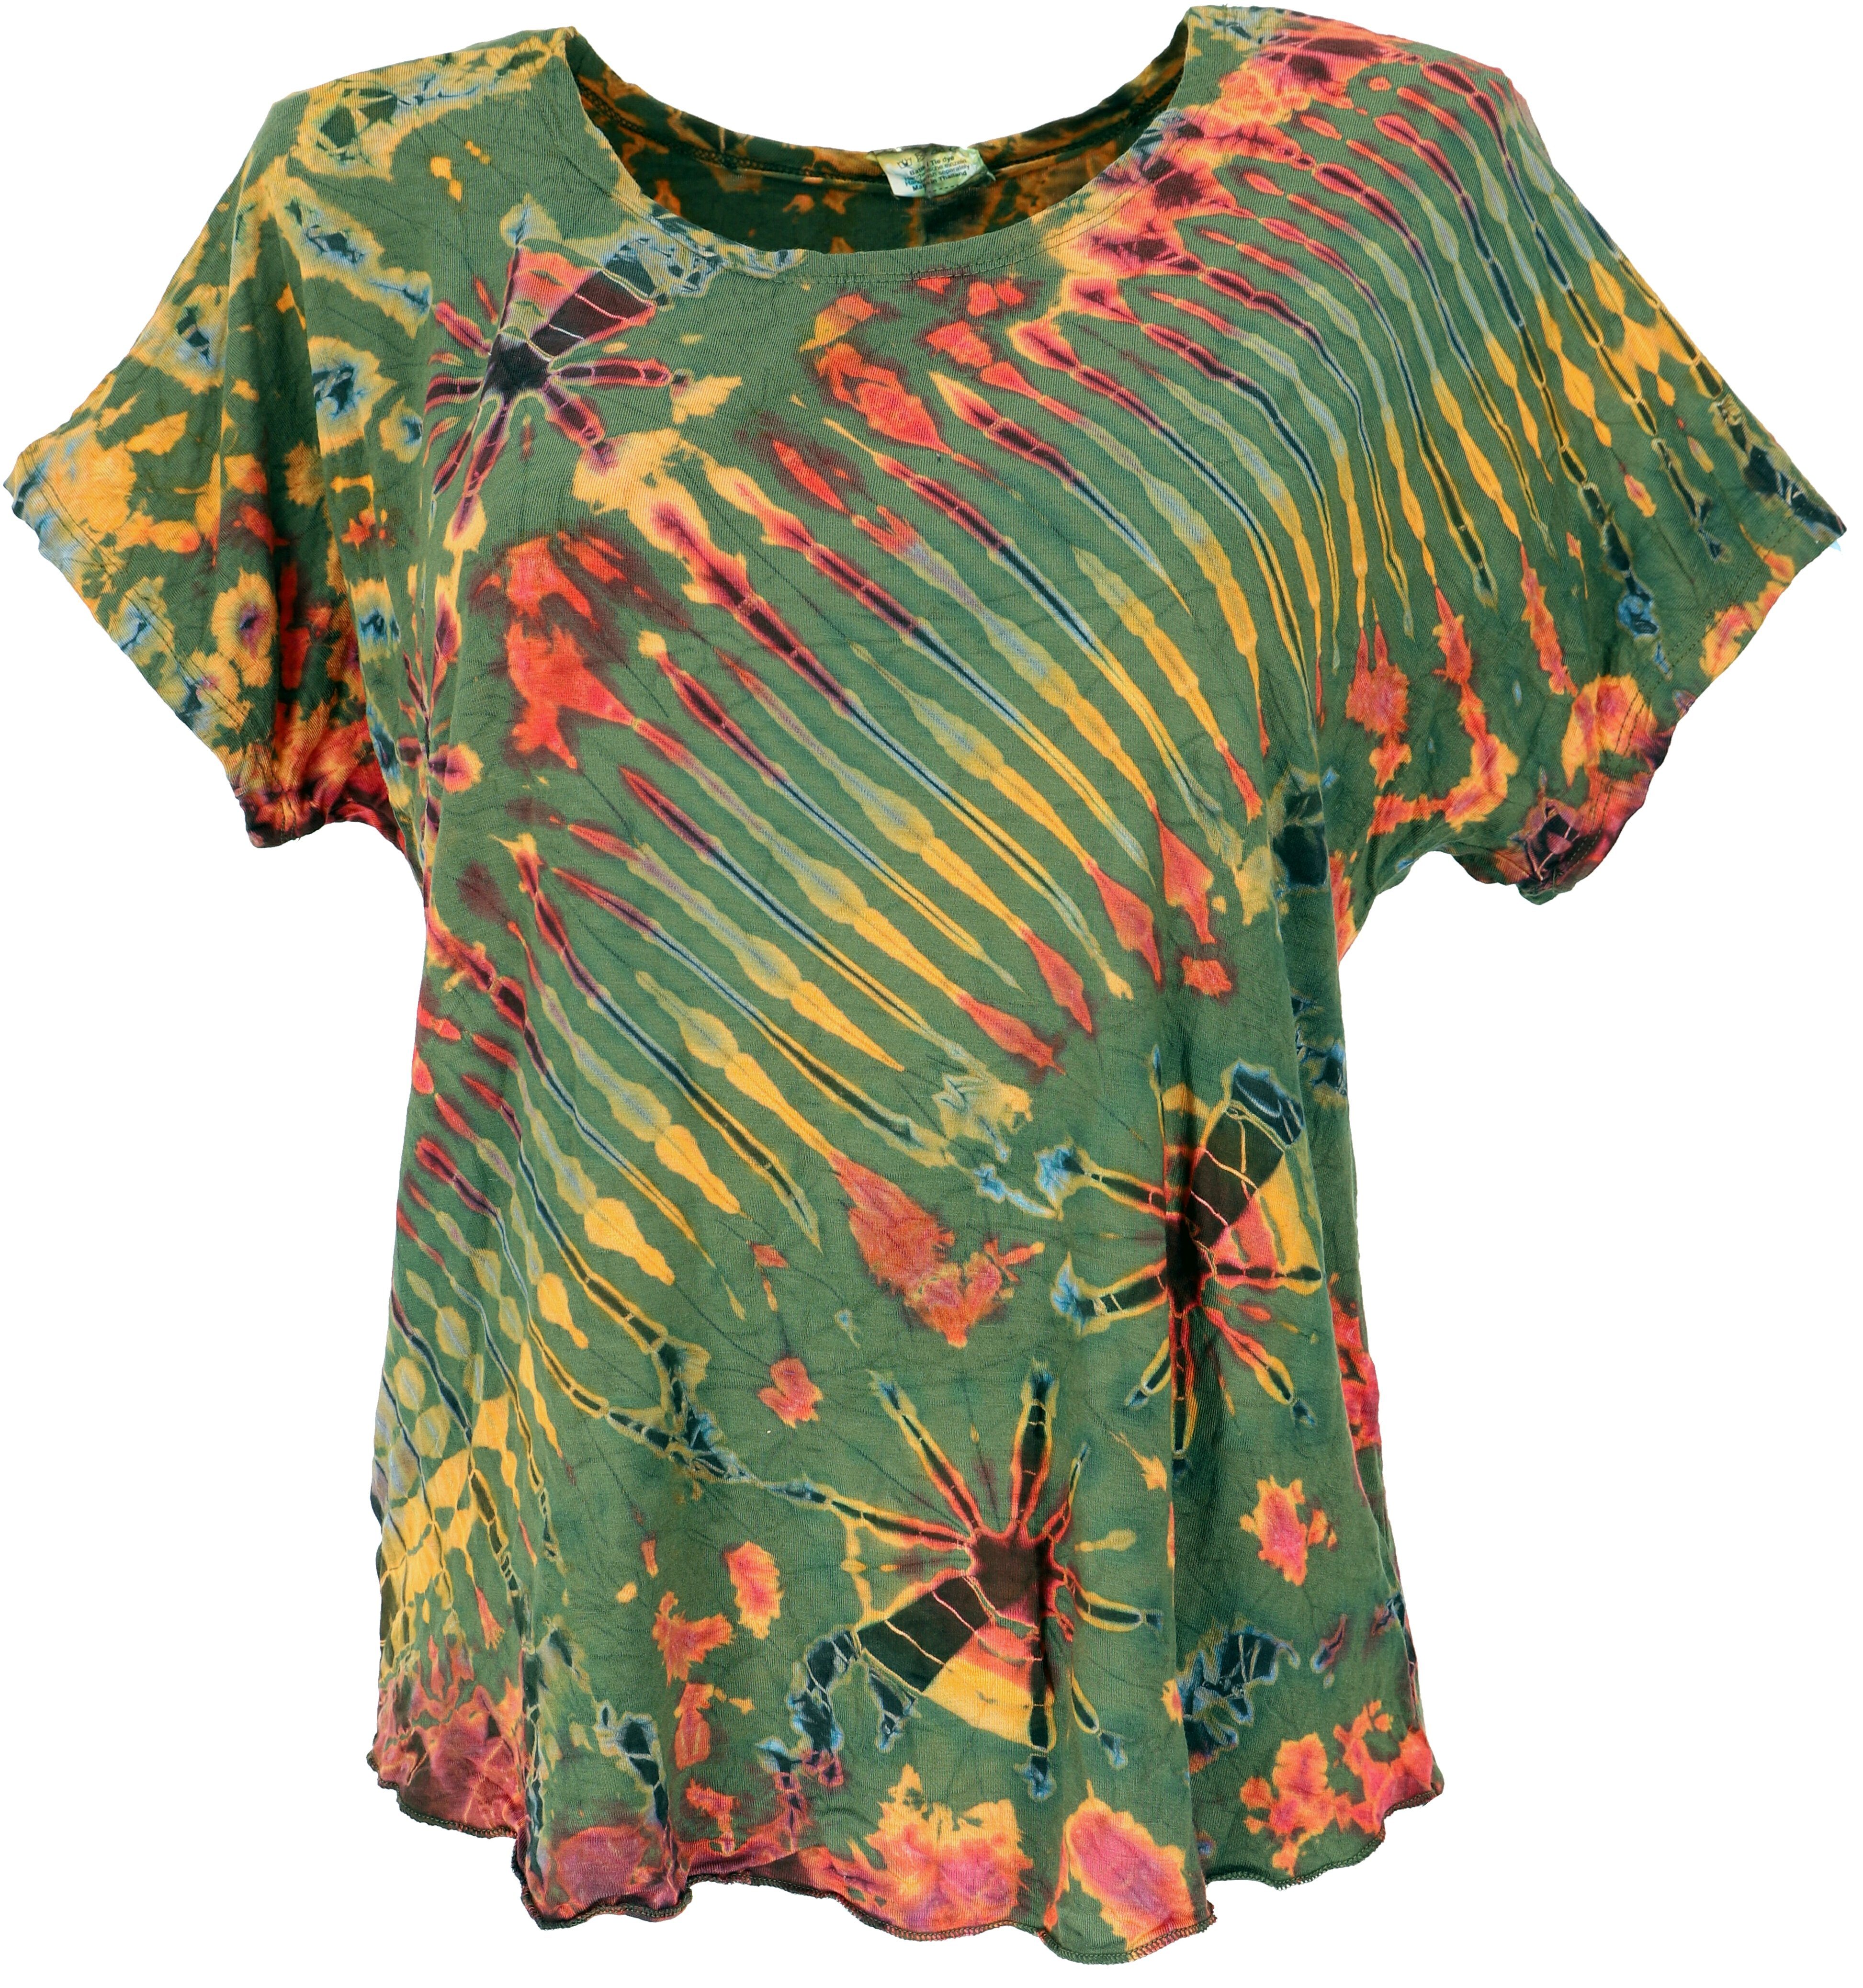 Guru-Shop T-Shirt Batik T-Shirt, Tie Dye Блузкиtop - olivgrün Festival, Ethno Style, Hippie, alternative Одяг